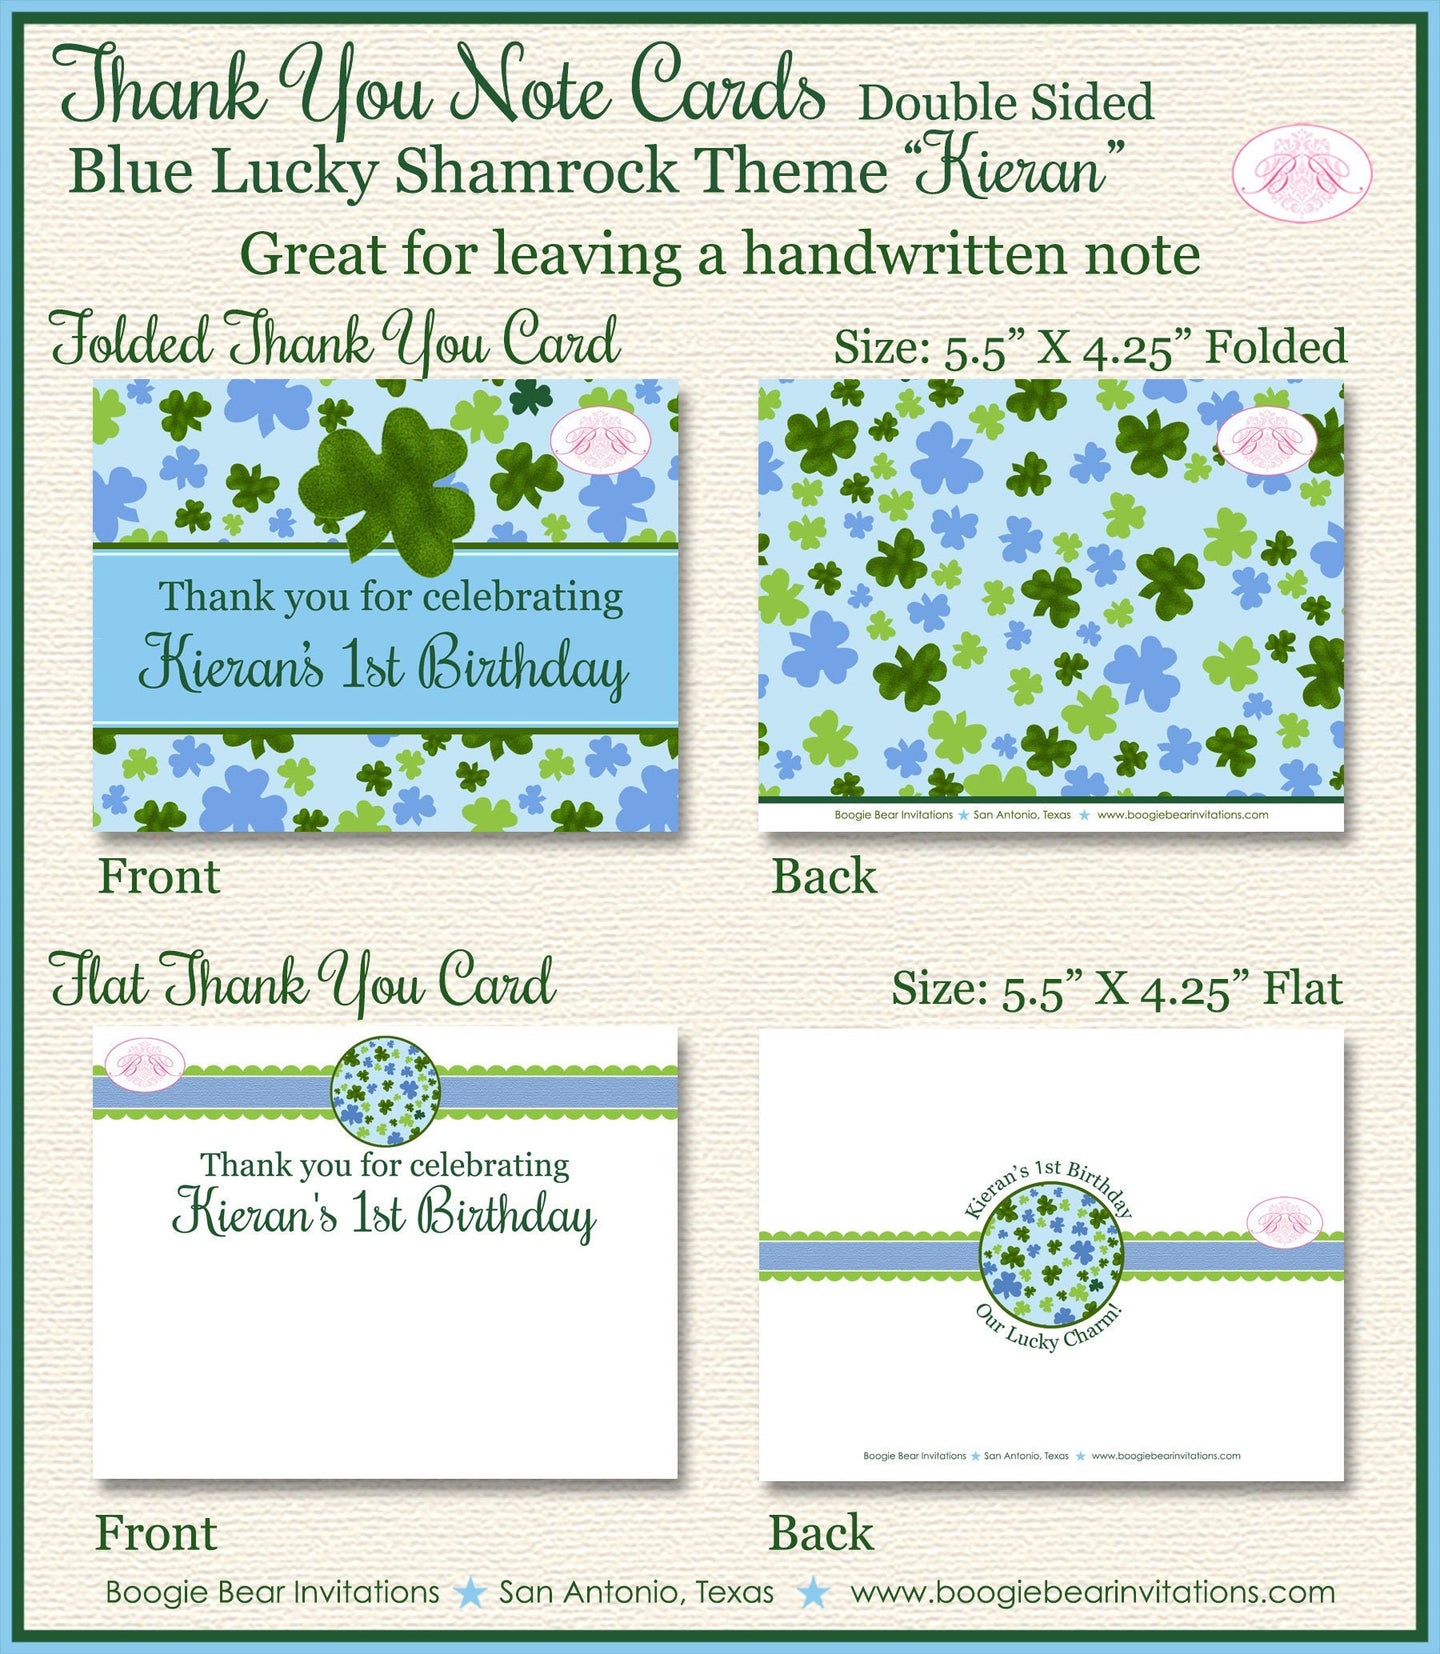 Blue Lucky Charm Party Thank You Card Birthday St. Patrick's Day Green Shamrock Clover Luck Boy Boogie Bear Invitations Kieran Theme Printed